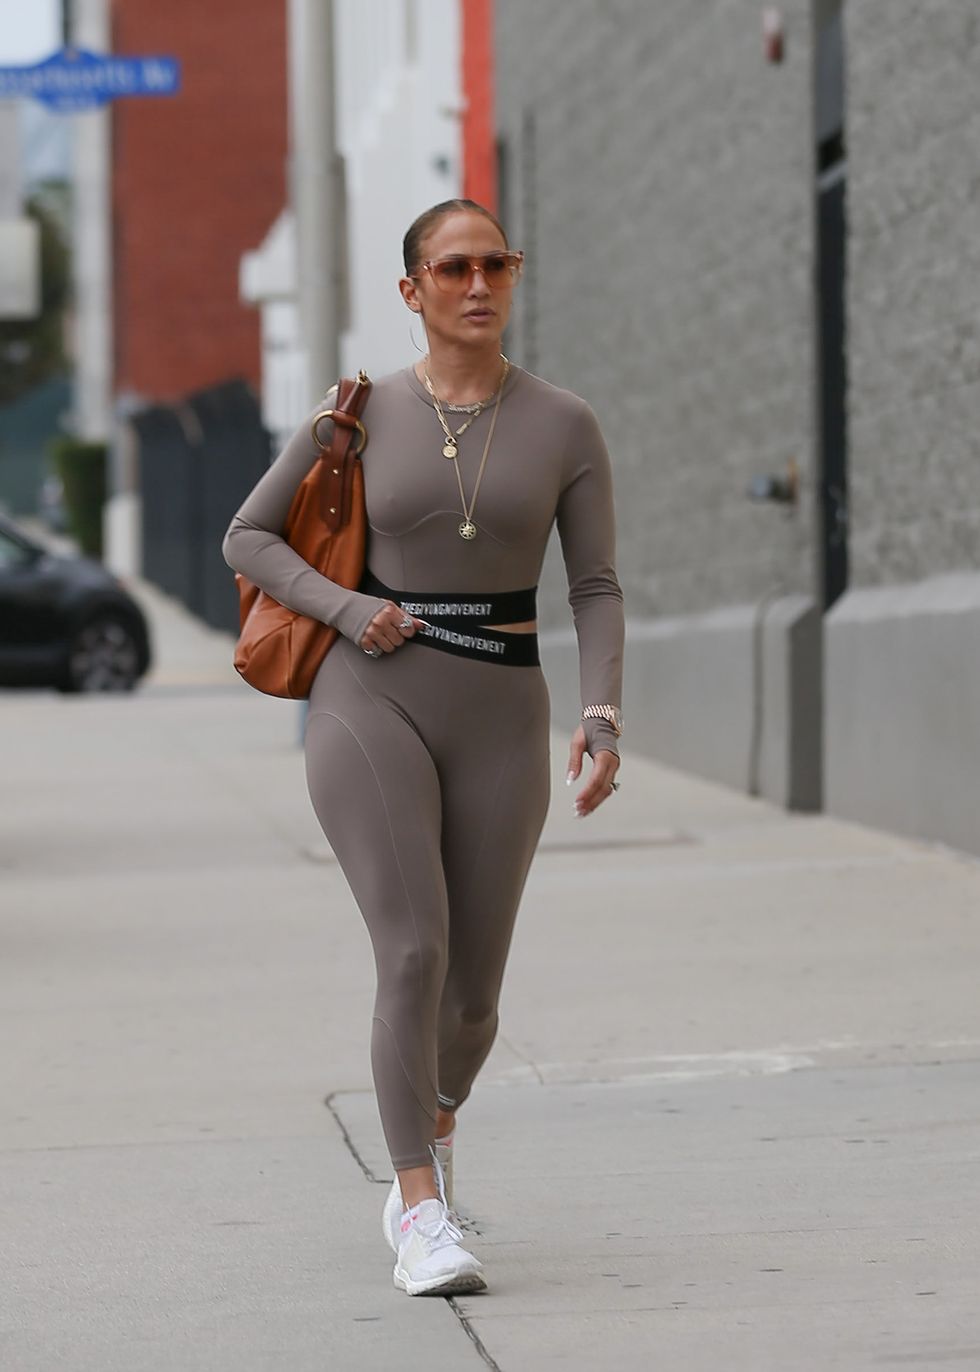 Jennifer Lopez sports a blue sweater and patterned leggings as she